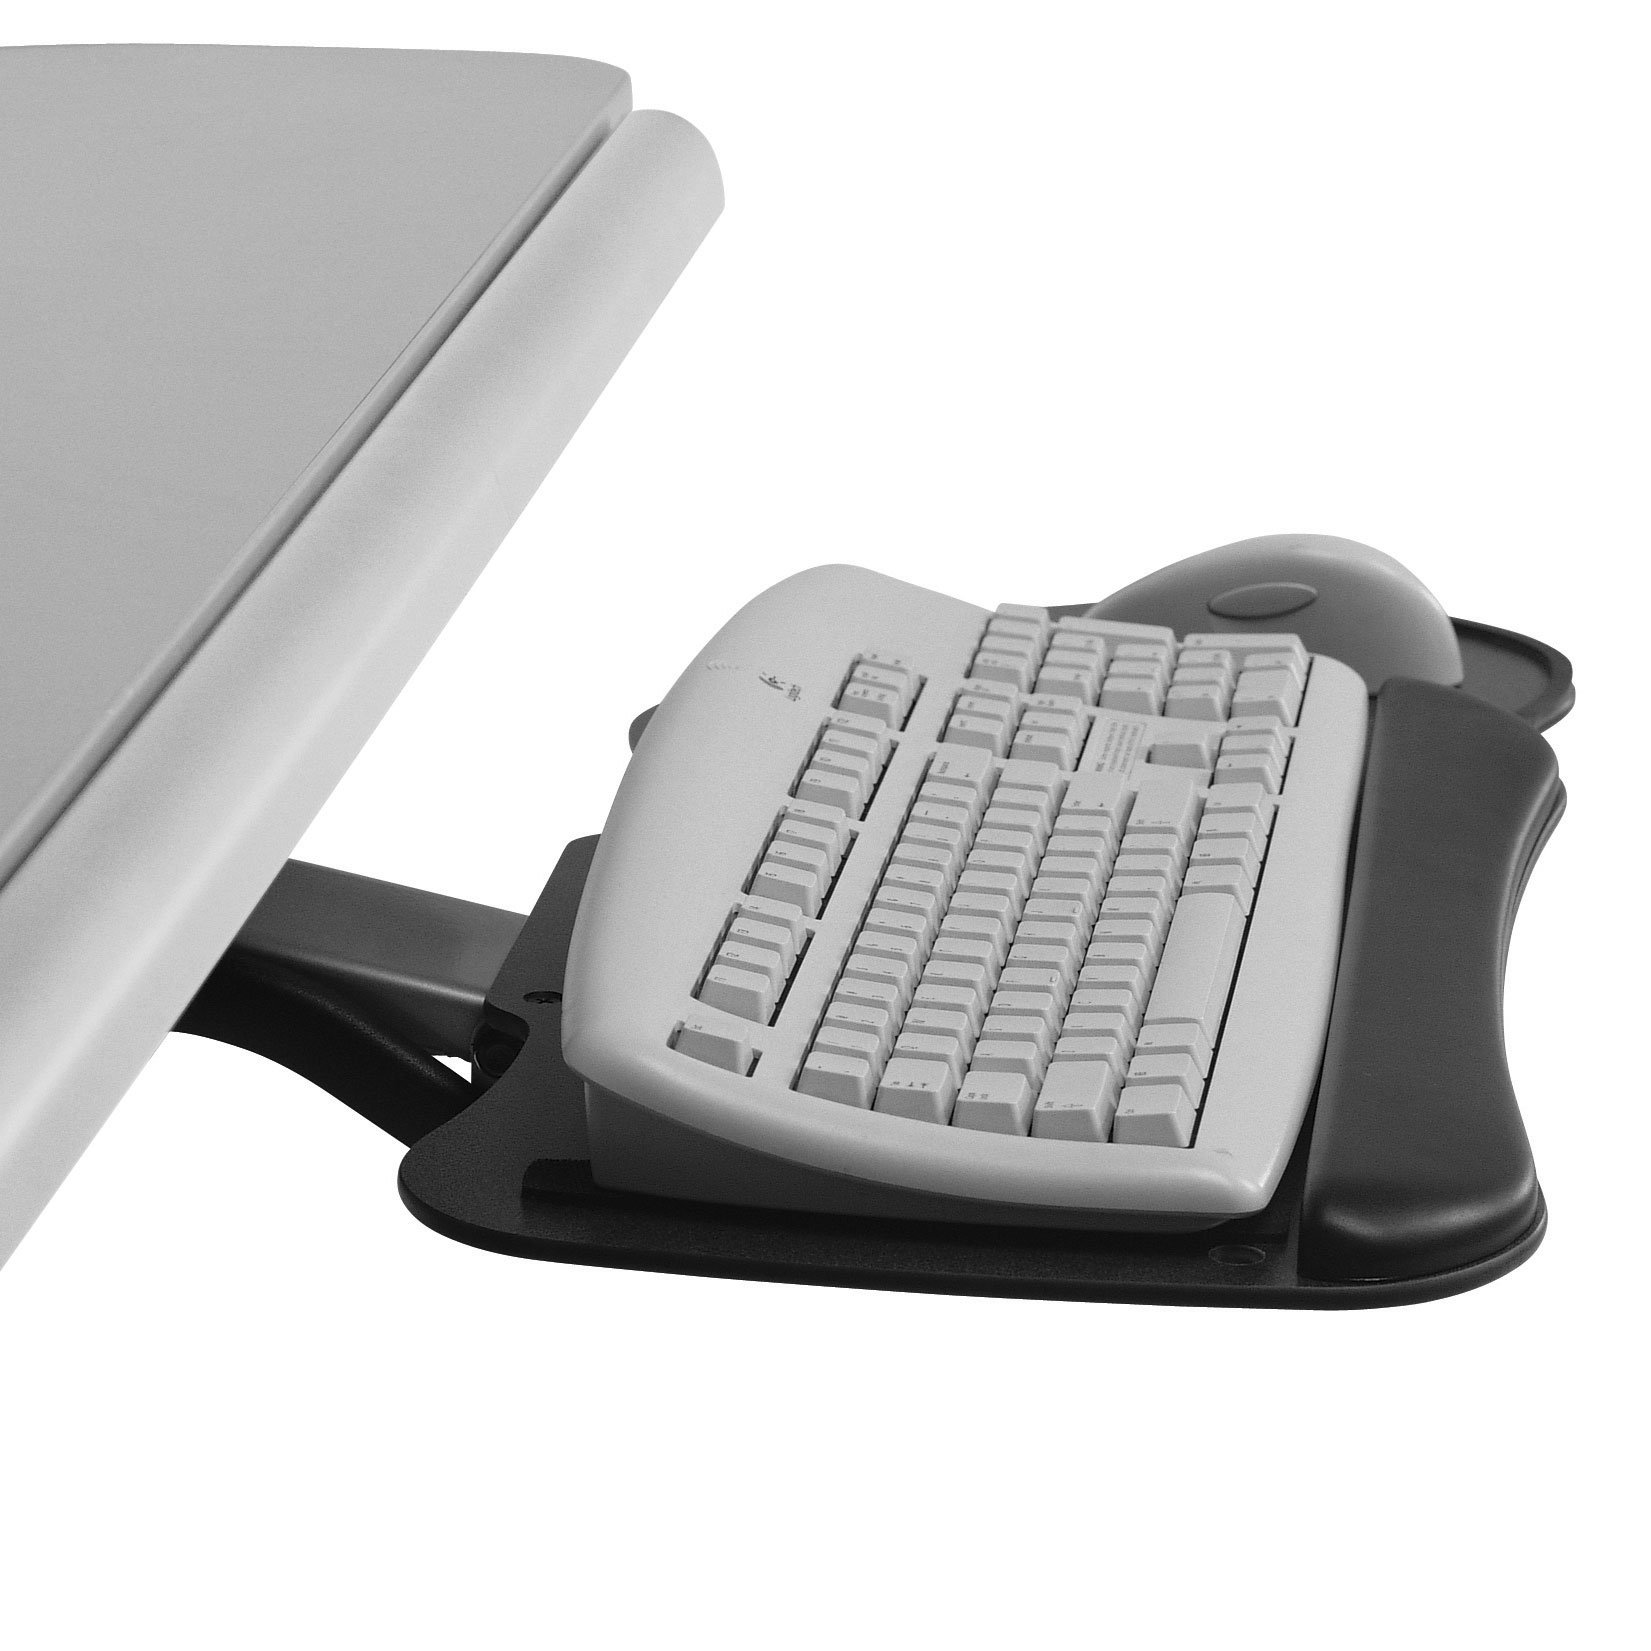 Ergotron UKMCBK Keyboard and Mouse Caddy, Super